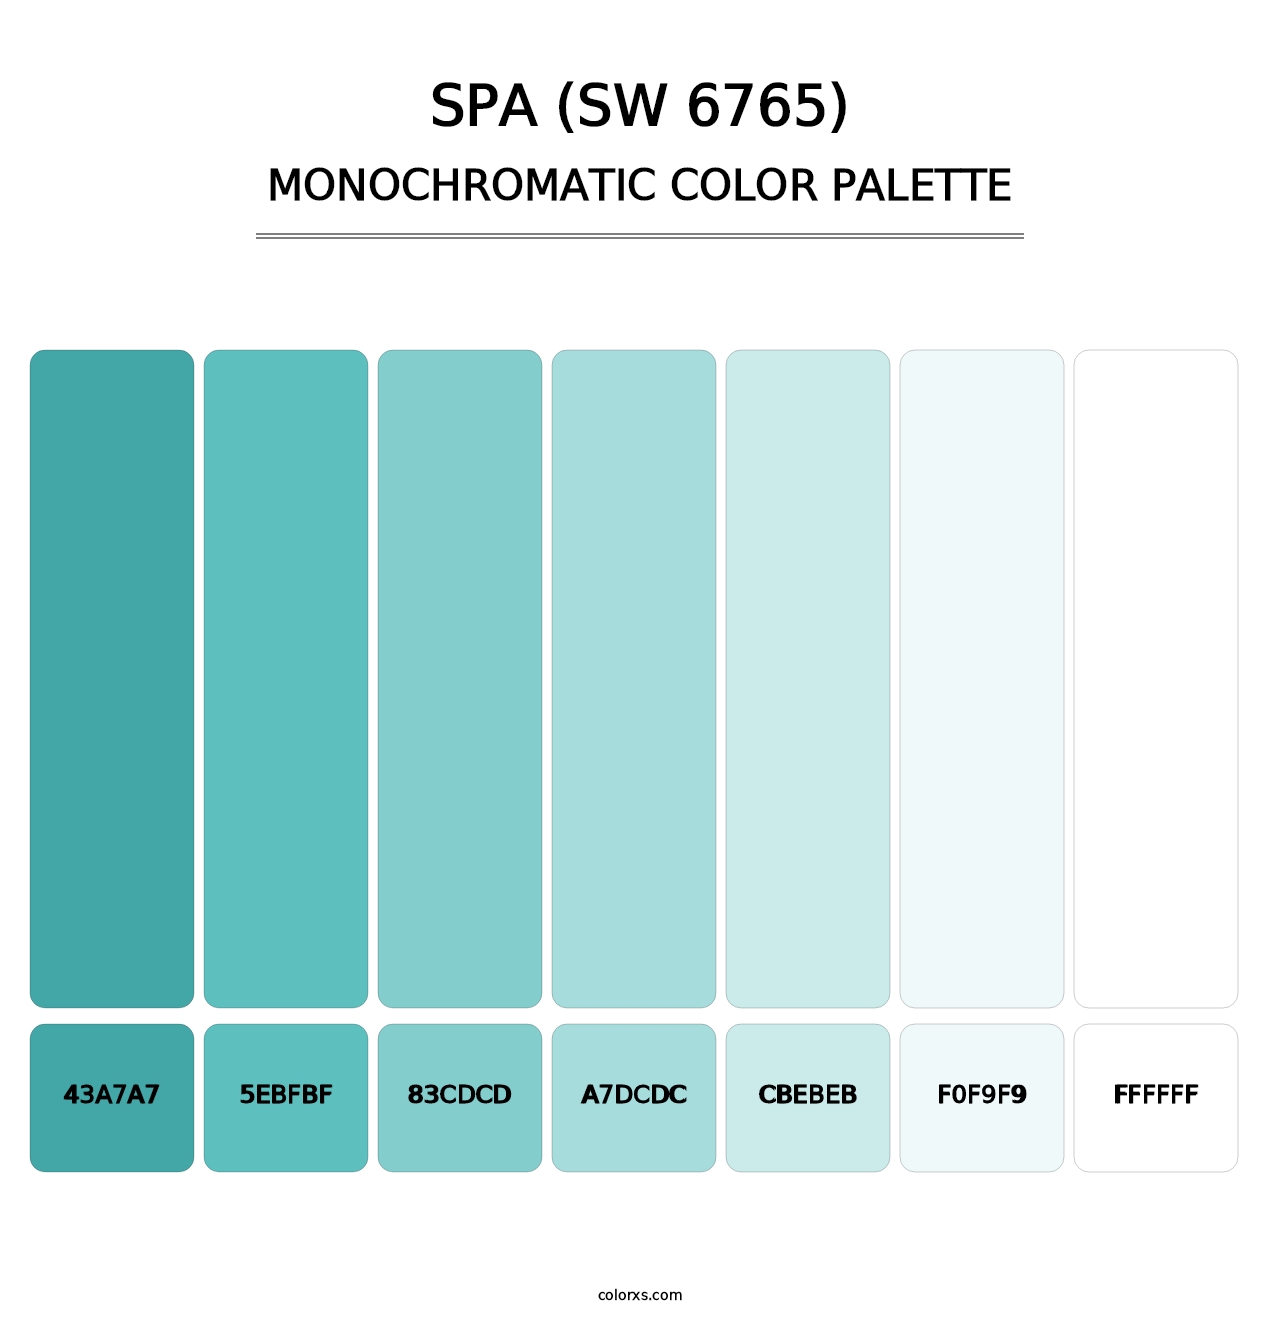 Spa (SW 6765) - Monochromatic Color Palette